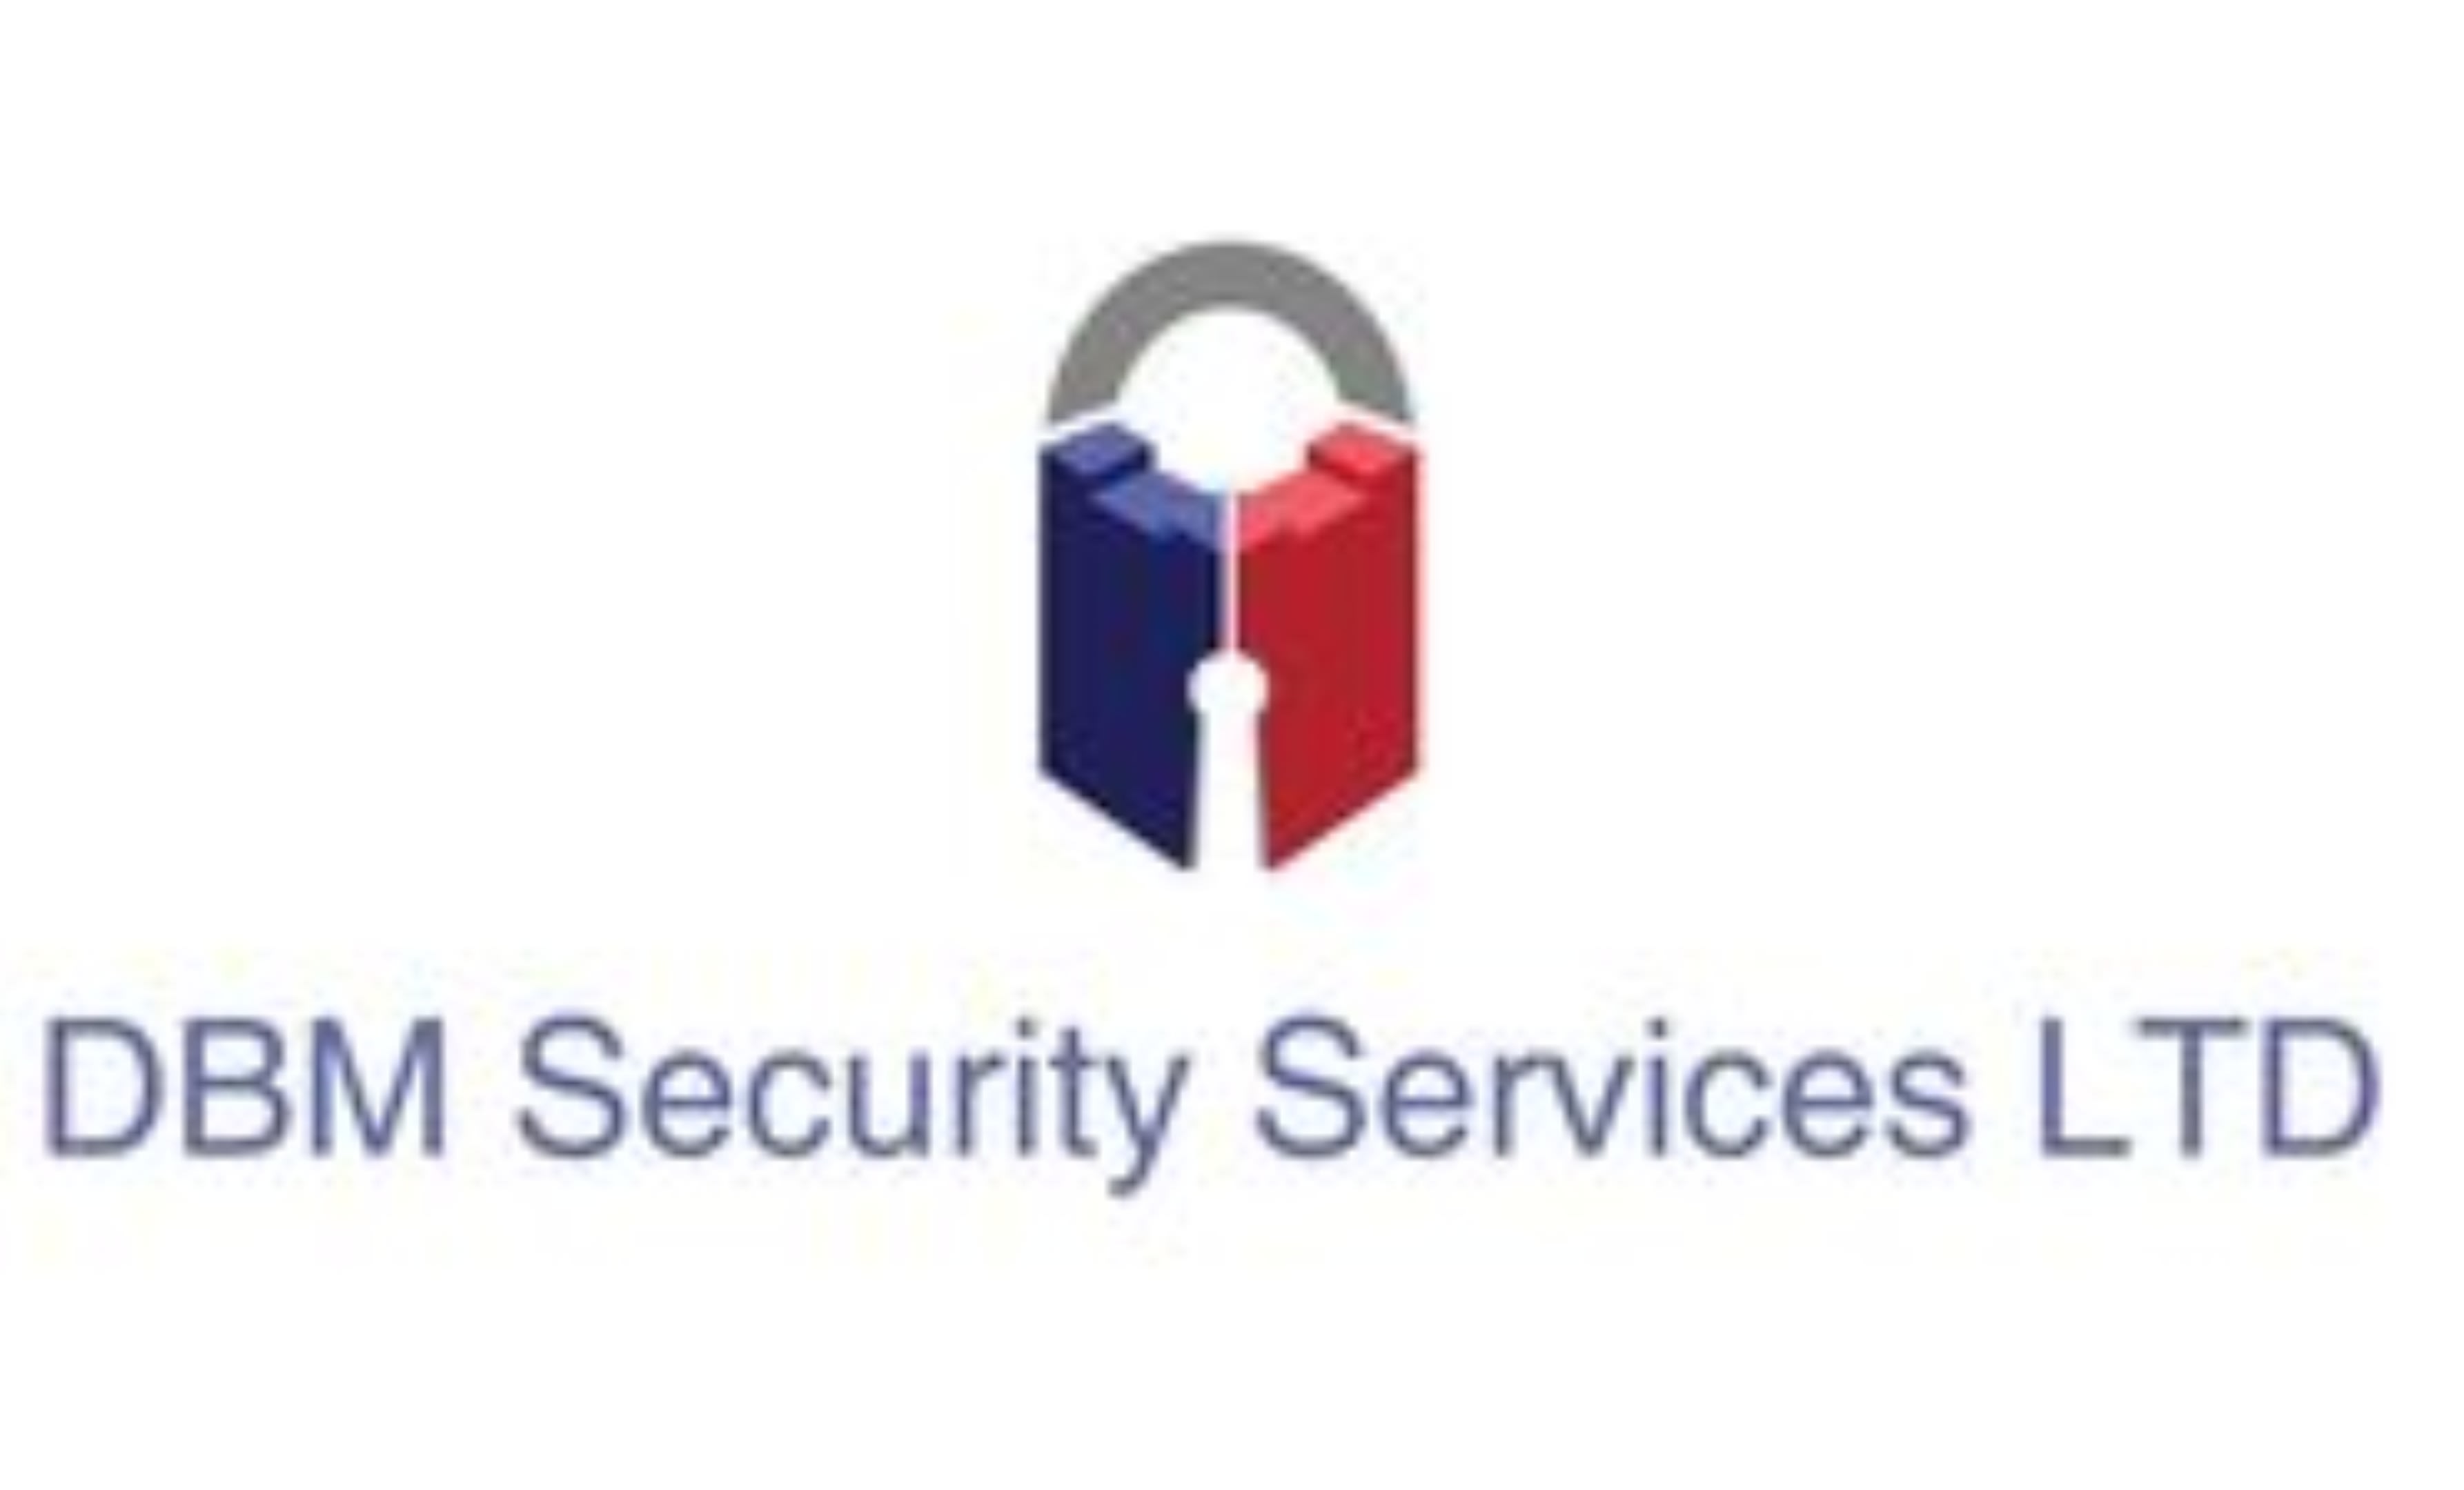 DBM Security Services Ltd